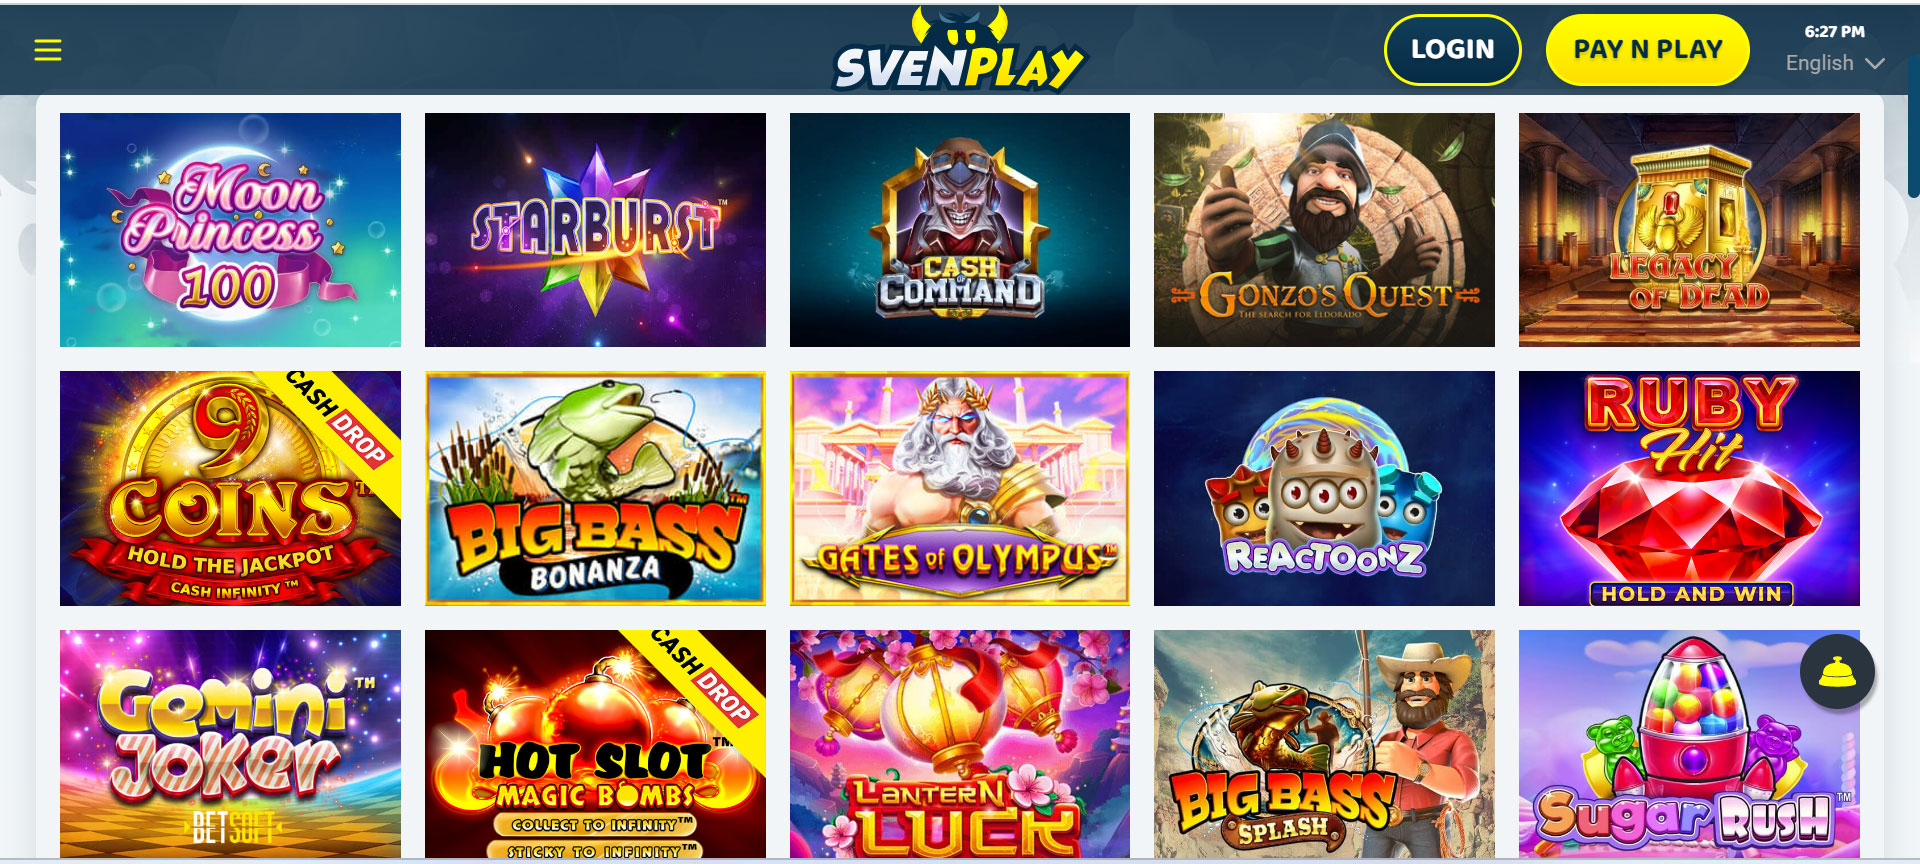 SvenPlay Casino Slots